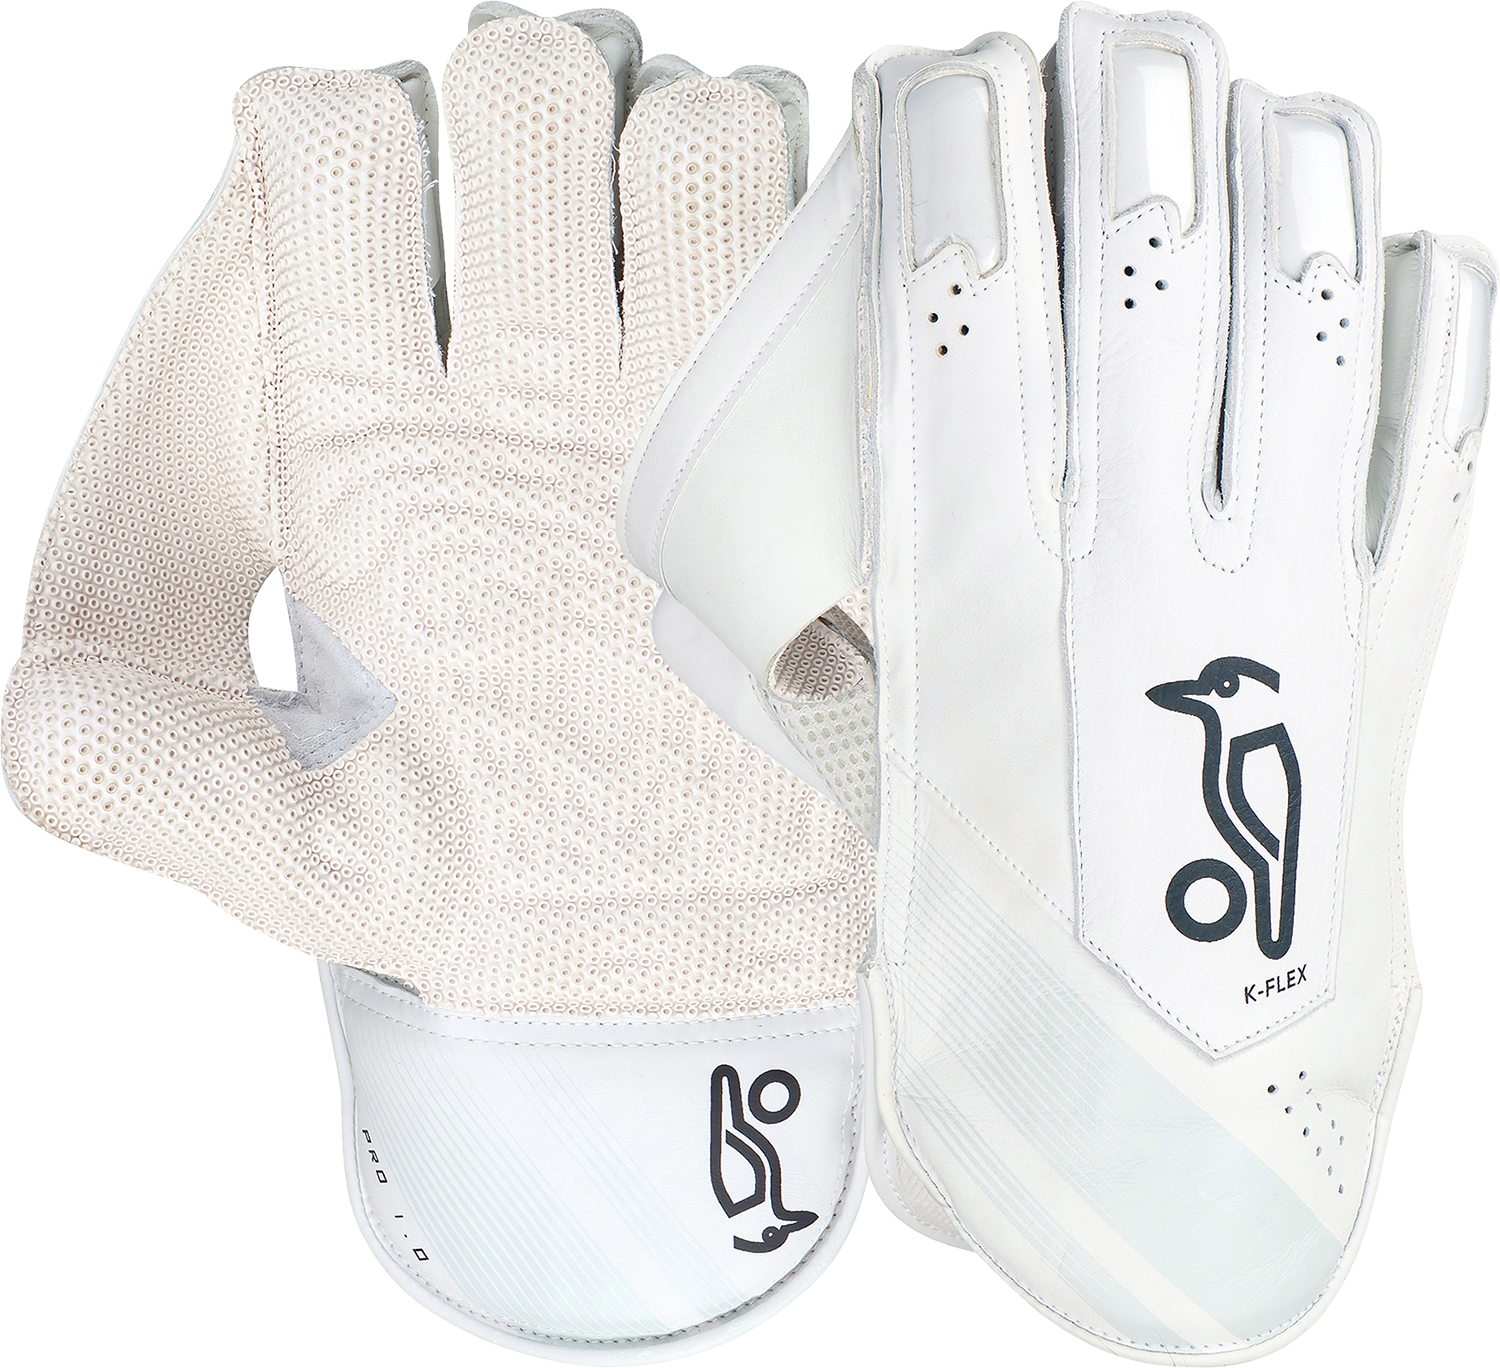 Kookaburra-Pro-1.0-Wicket-Keeping-Glove